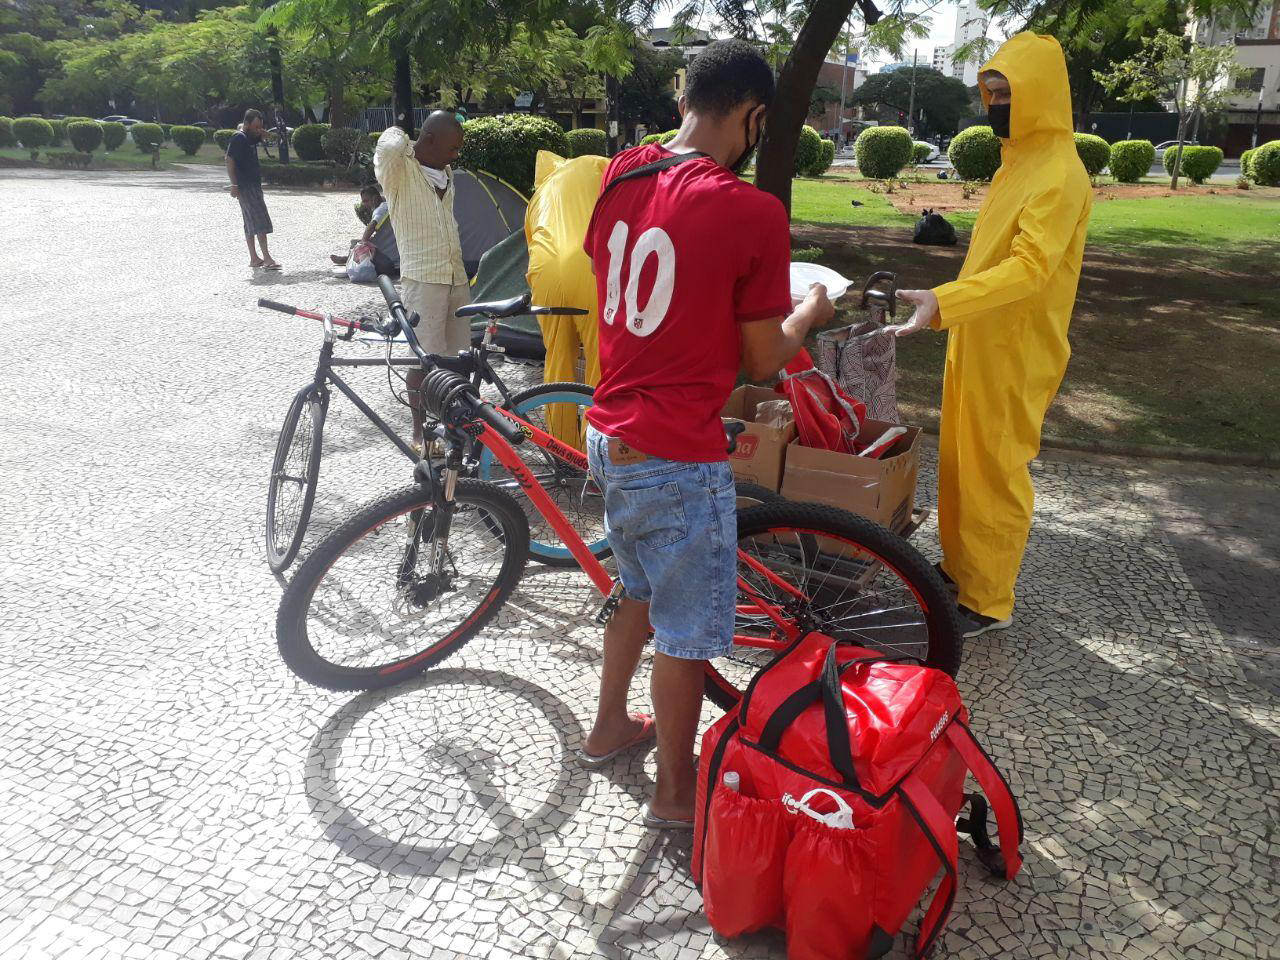 Distributing aid kits in the neighborhood of Kasa Invisível.